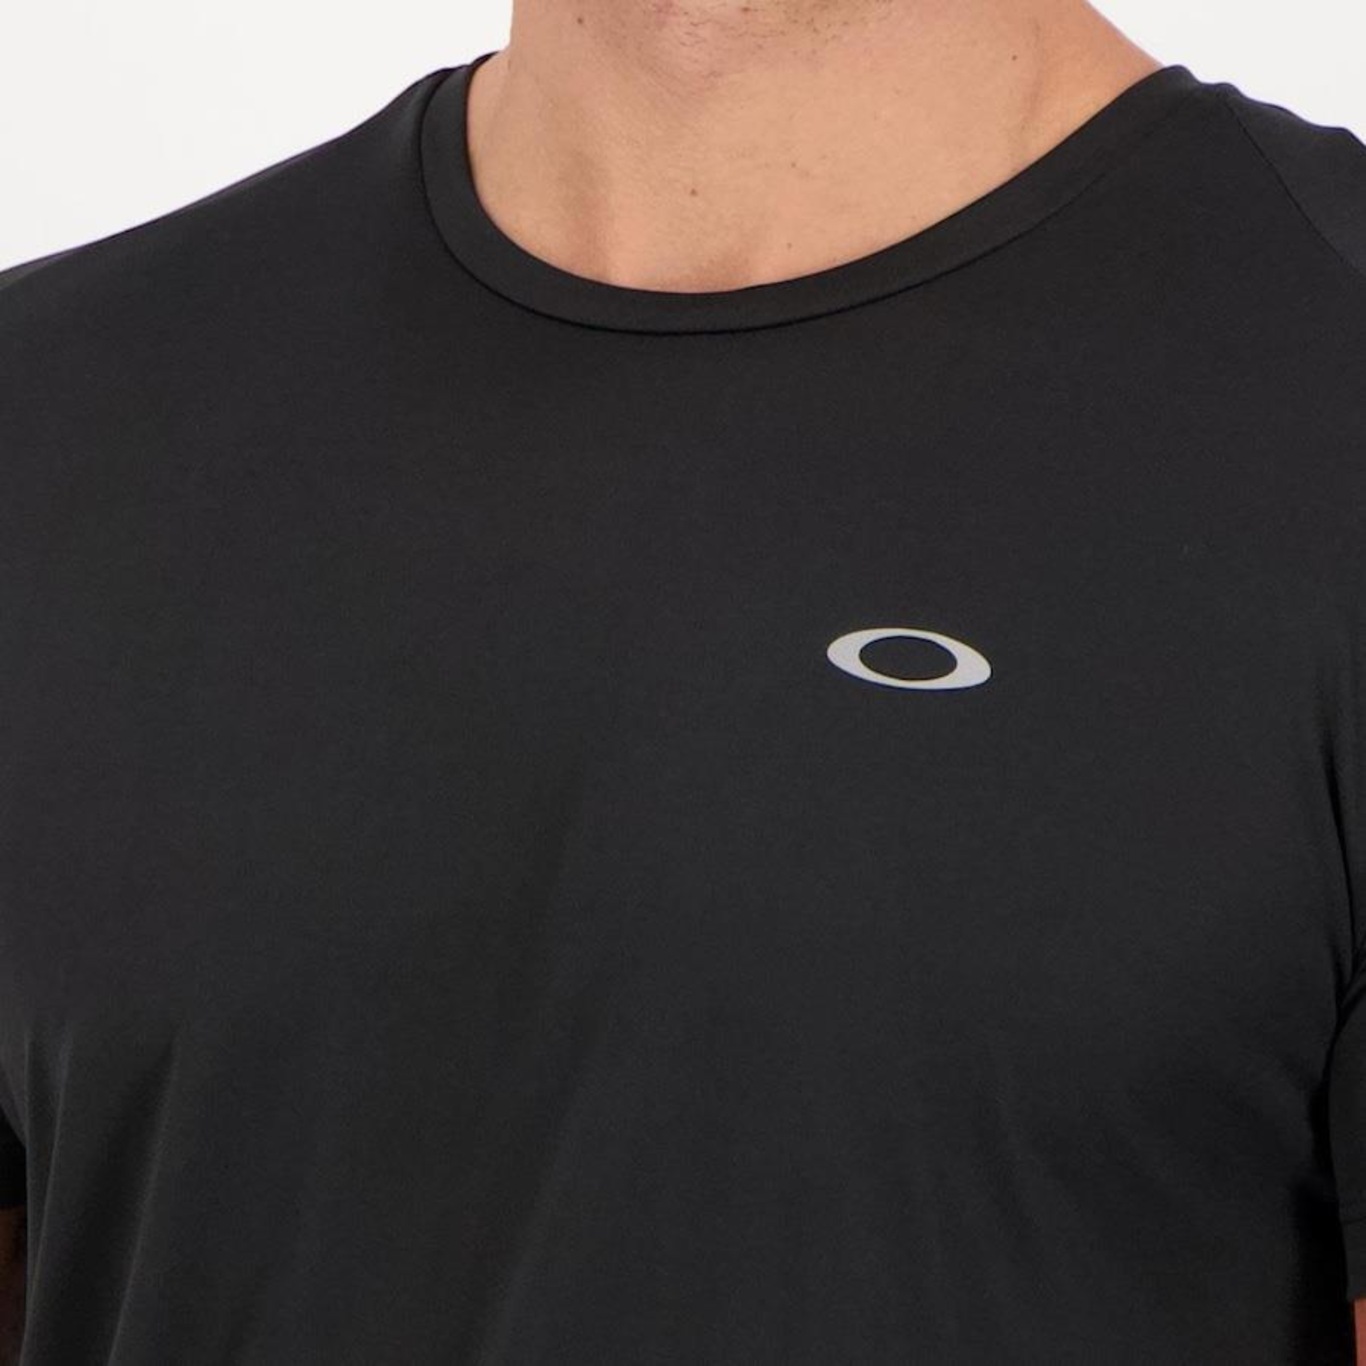 Camiseta Oakley Daily Sport Ii Masculina - A Esportiva